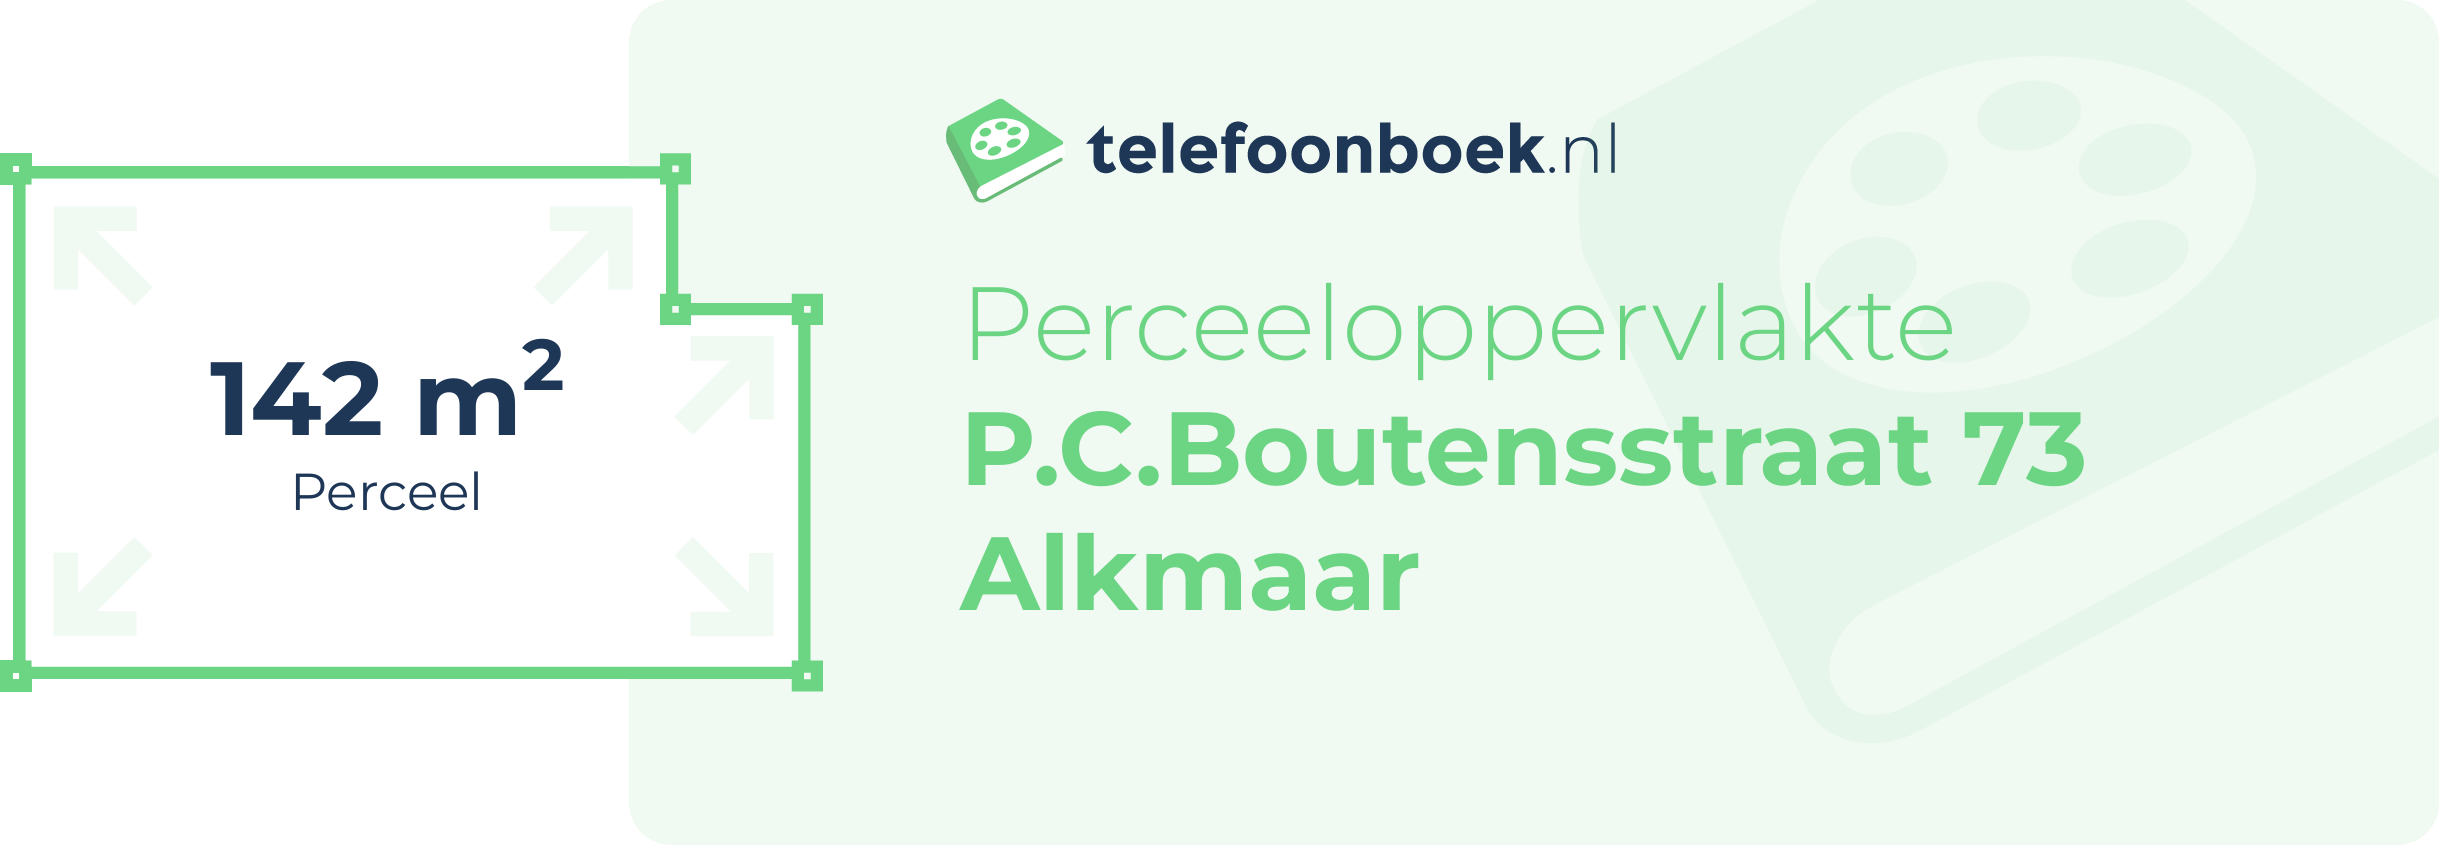 Perceeloppervlakte P.C.Boutensstraat 73 Alkmaar